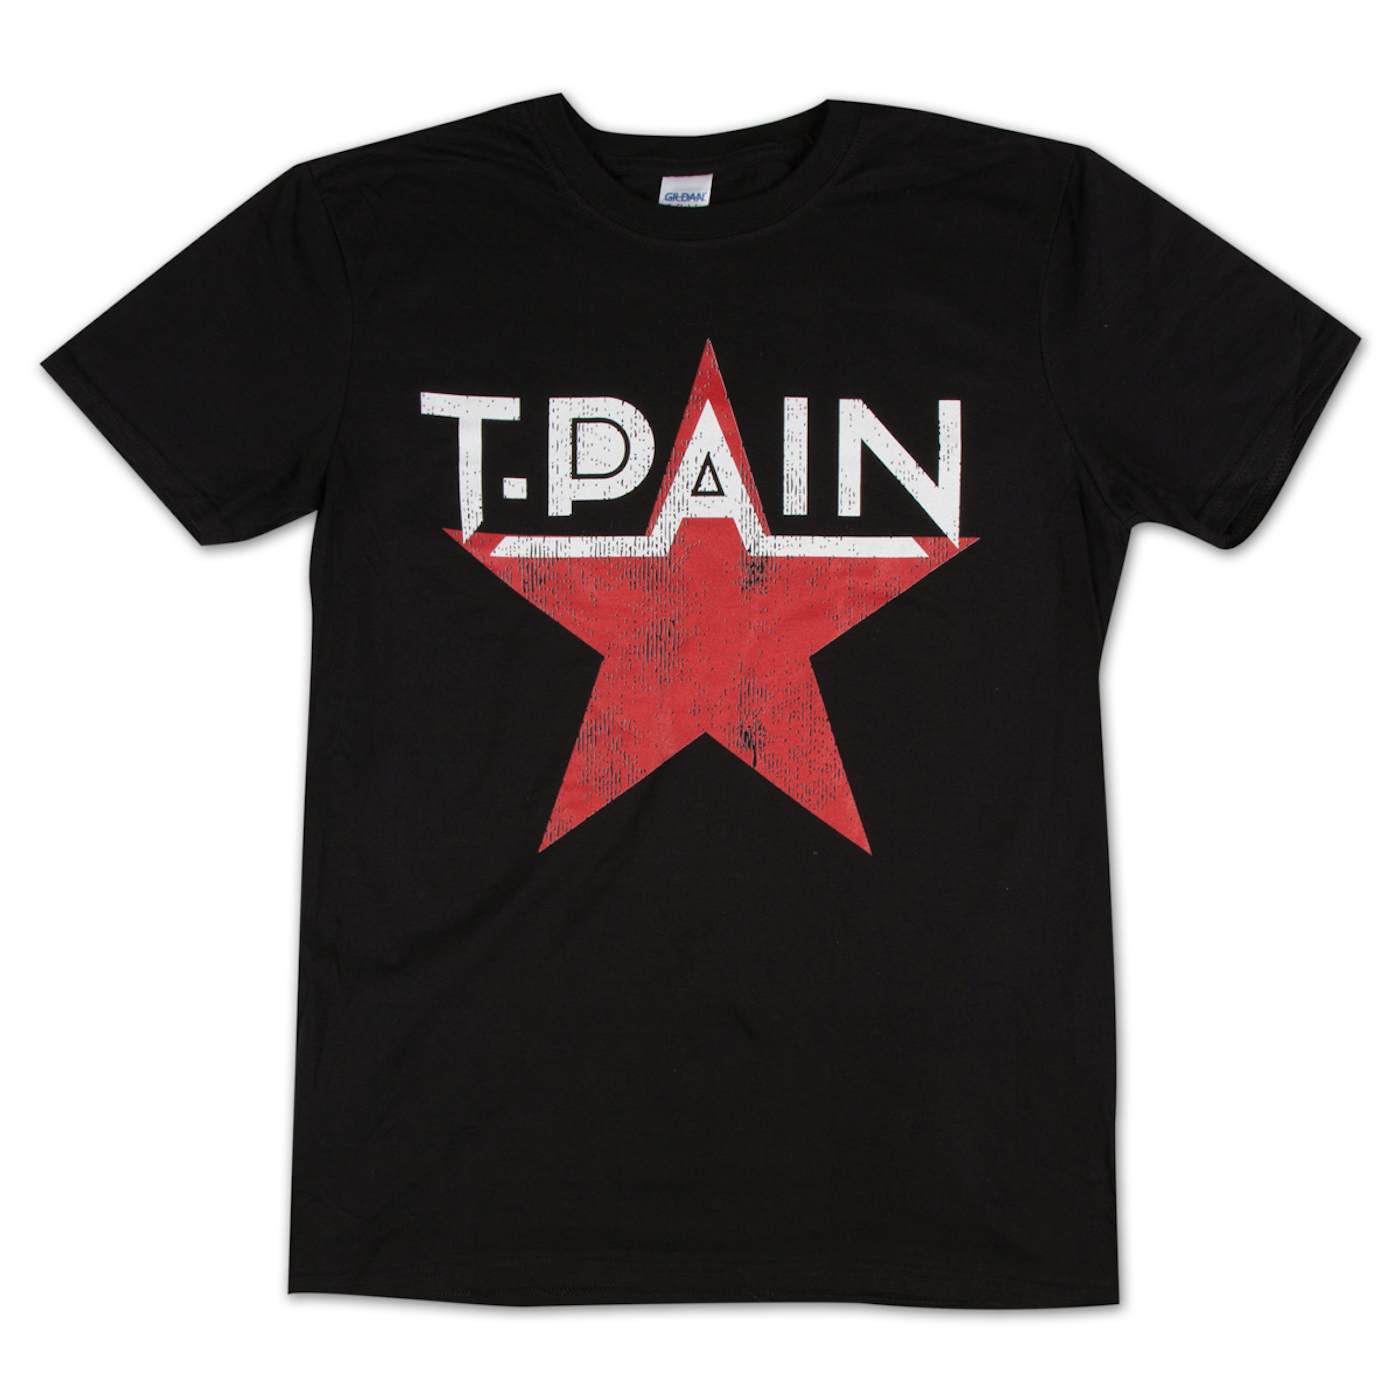 T-Pain Star T-shirt